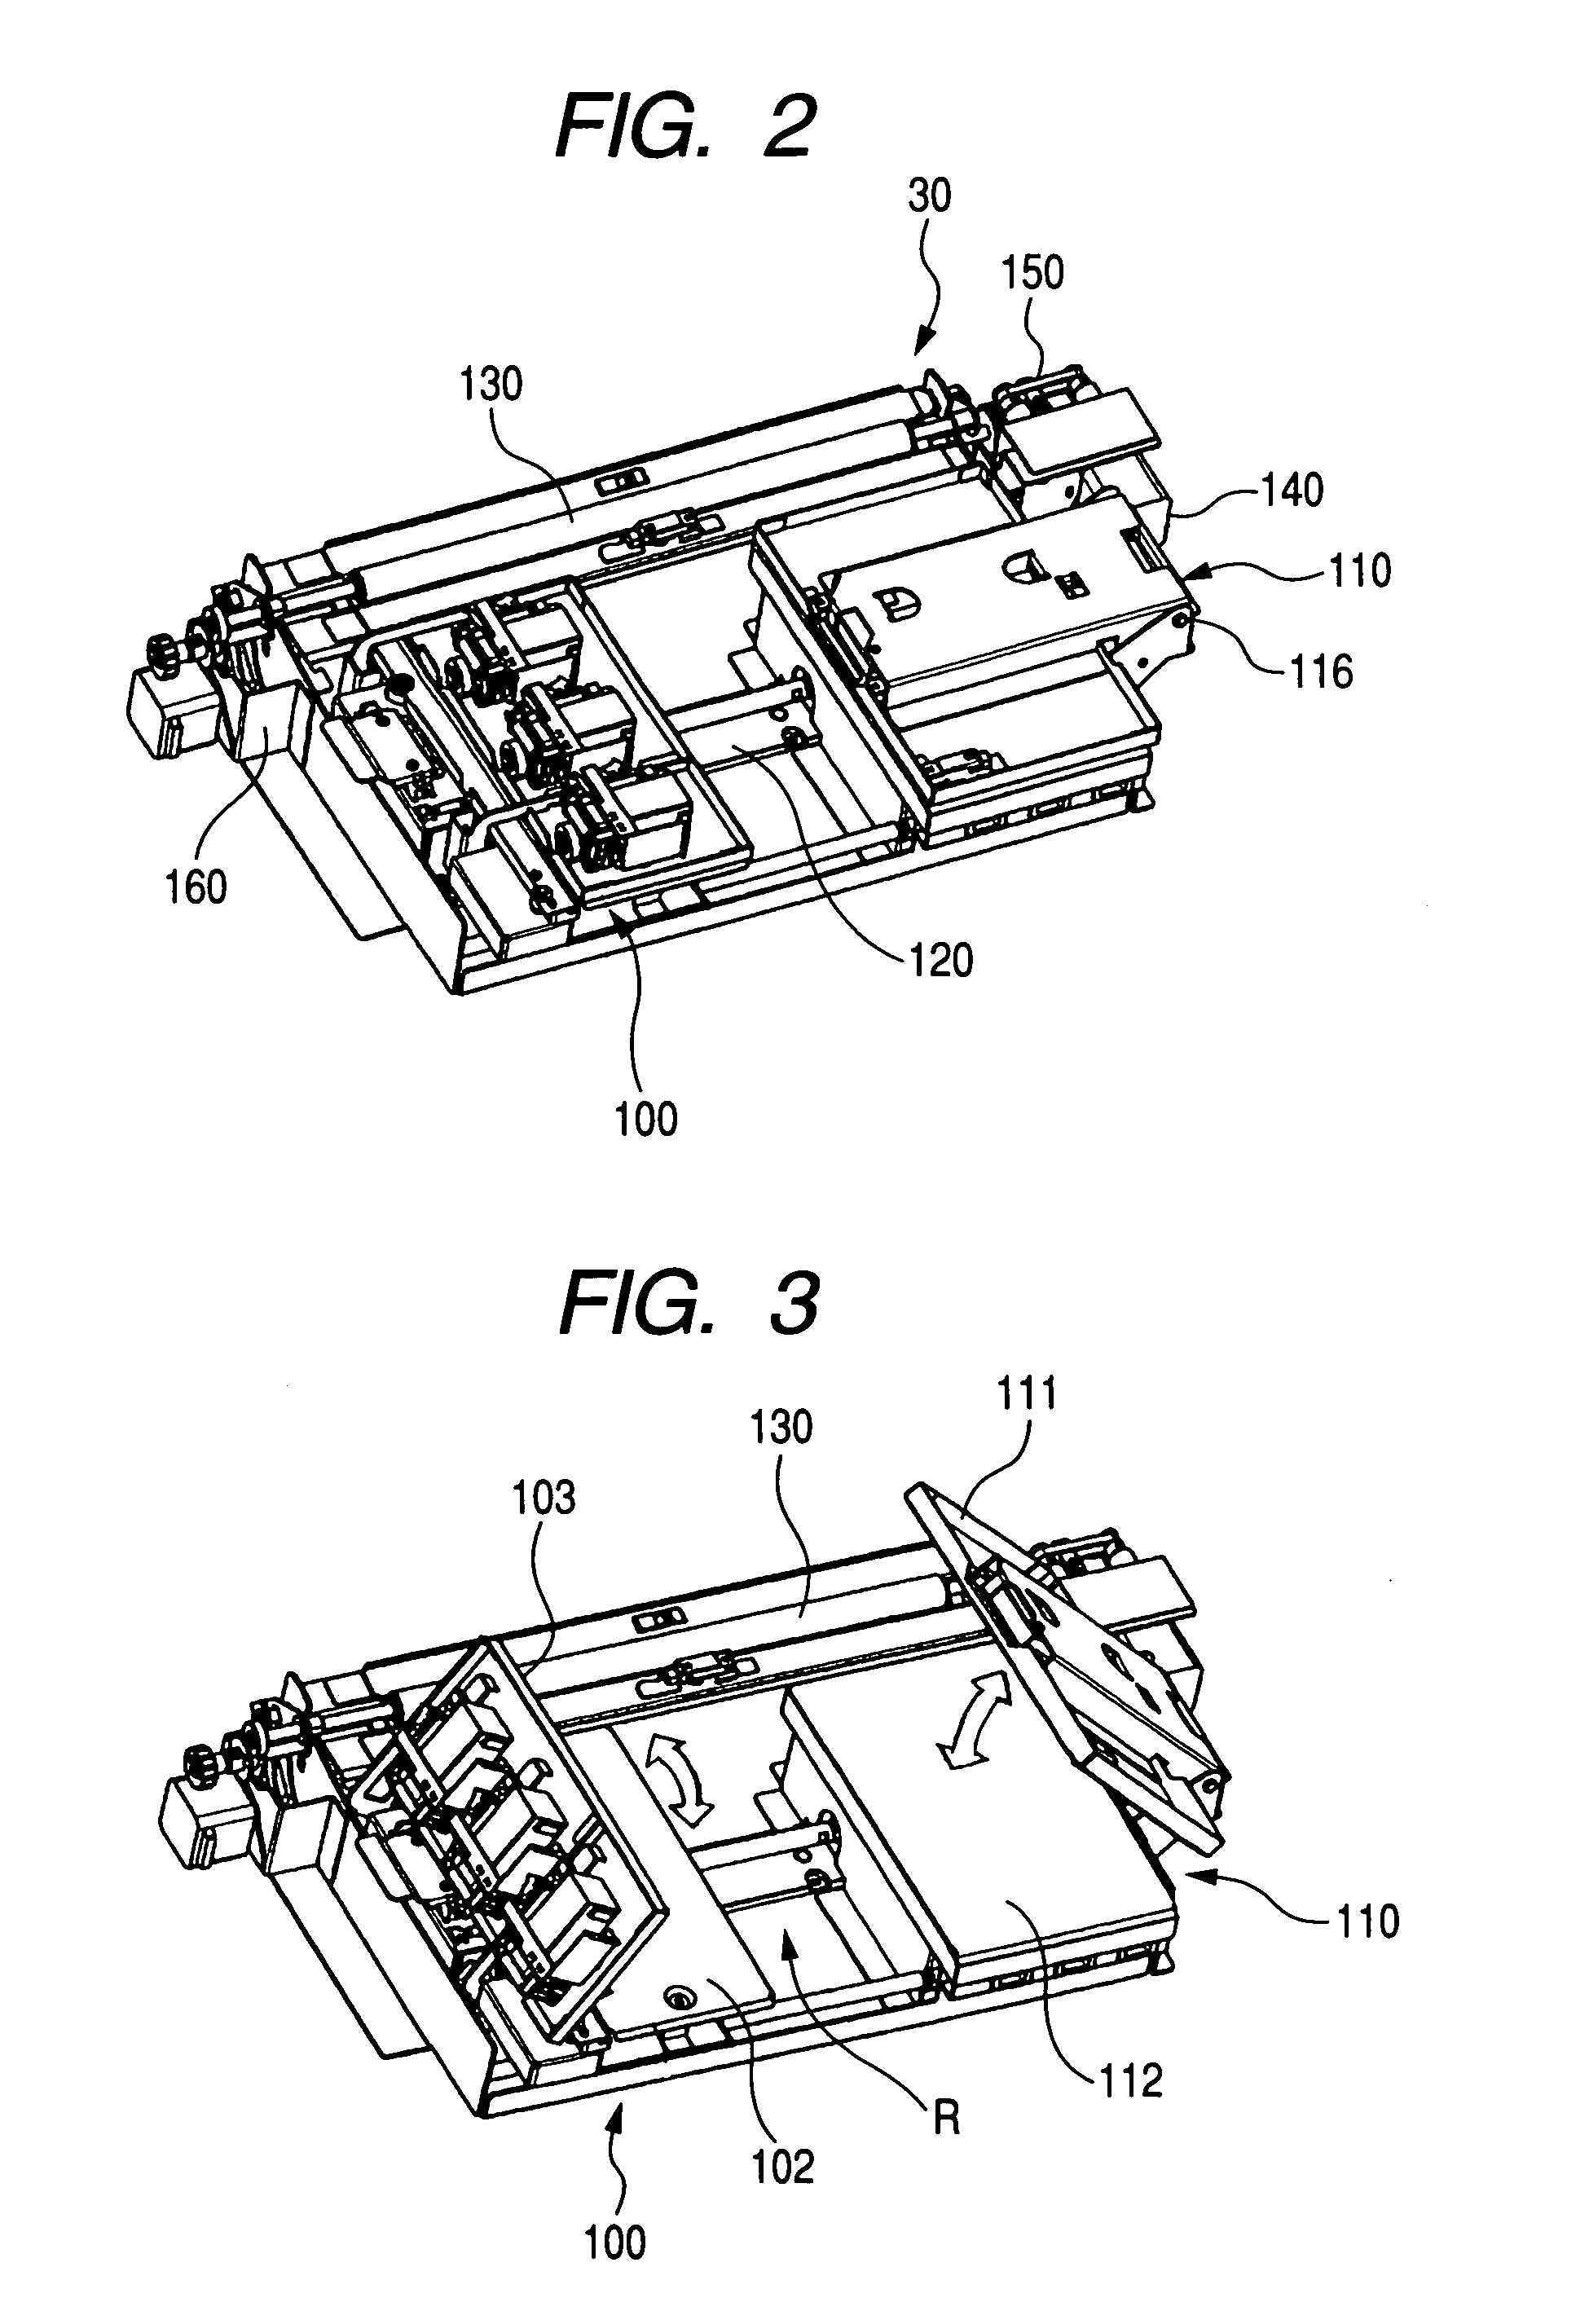 Sheet transport apparatus, image forming apparatus, and image reading apparatus